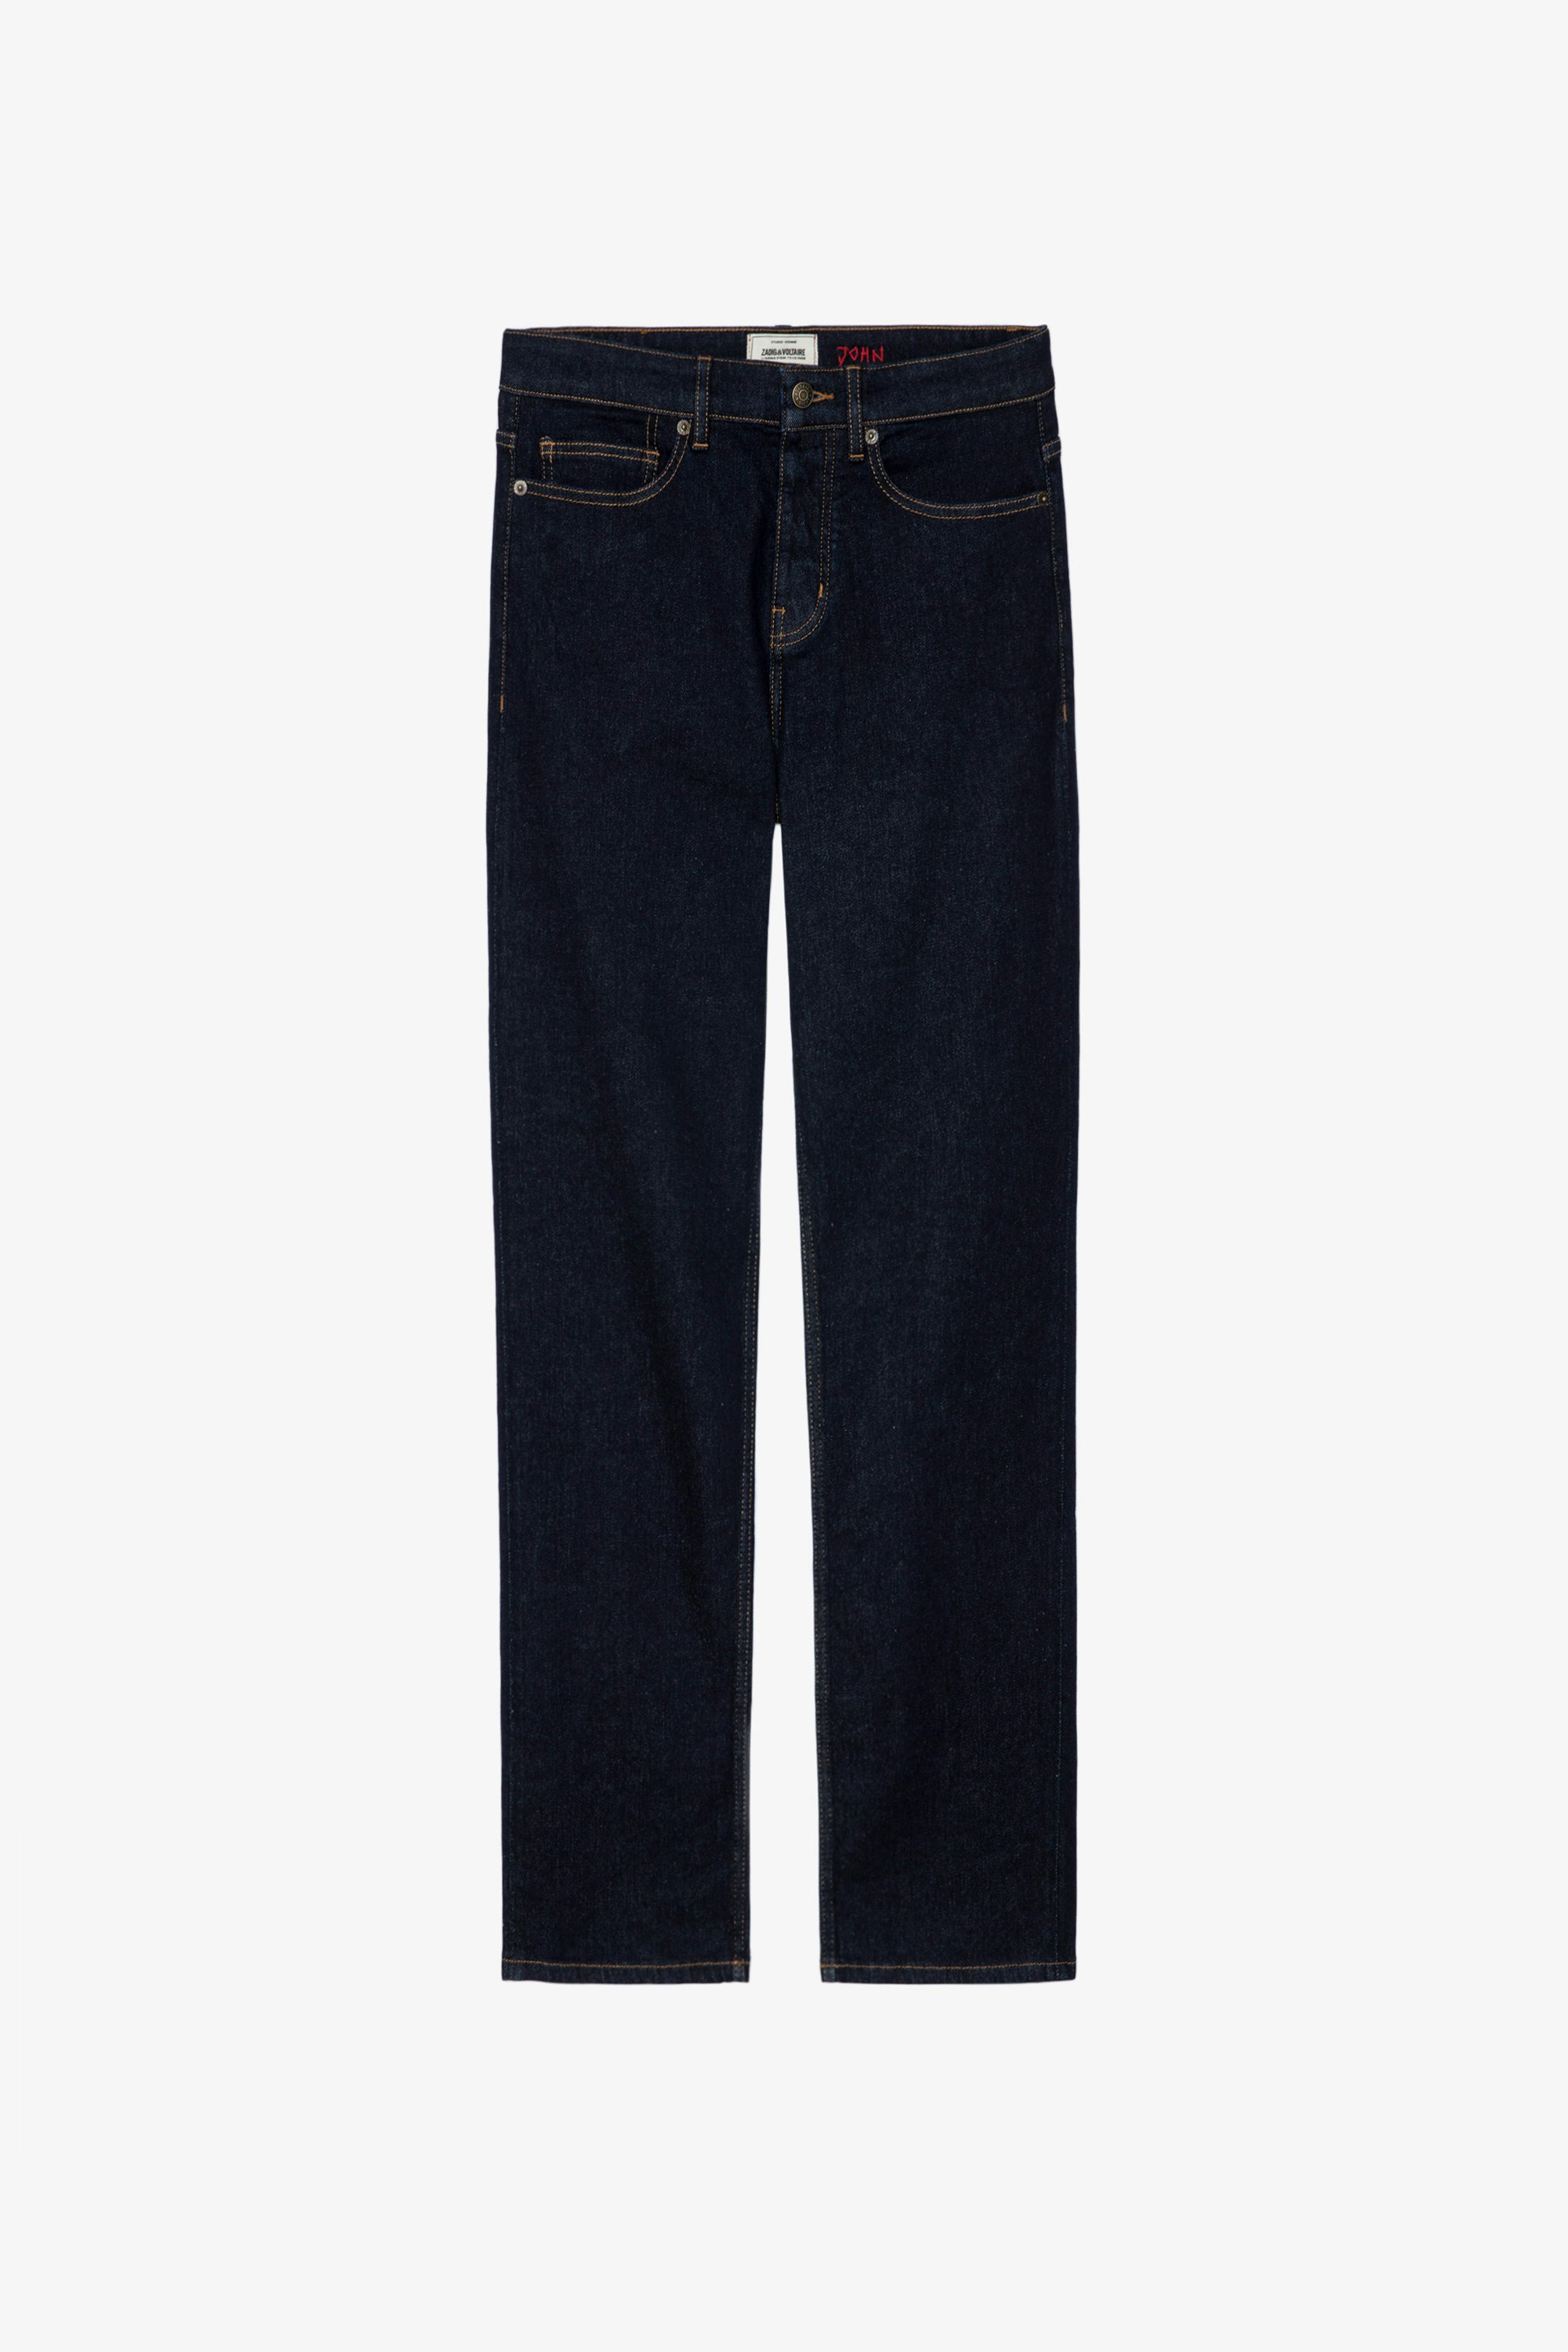 John Eco Brut Jeans Men's contrasting denim jeans